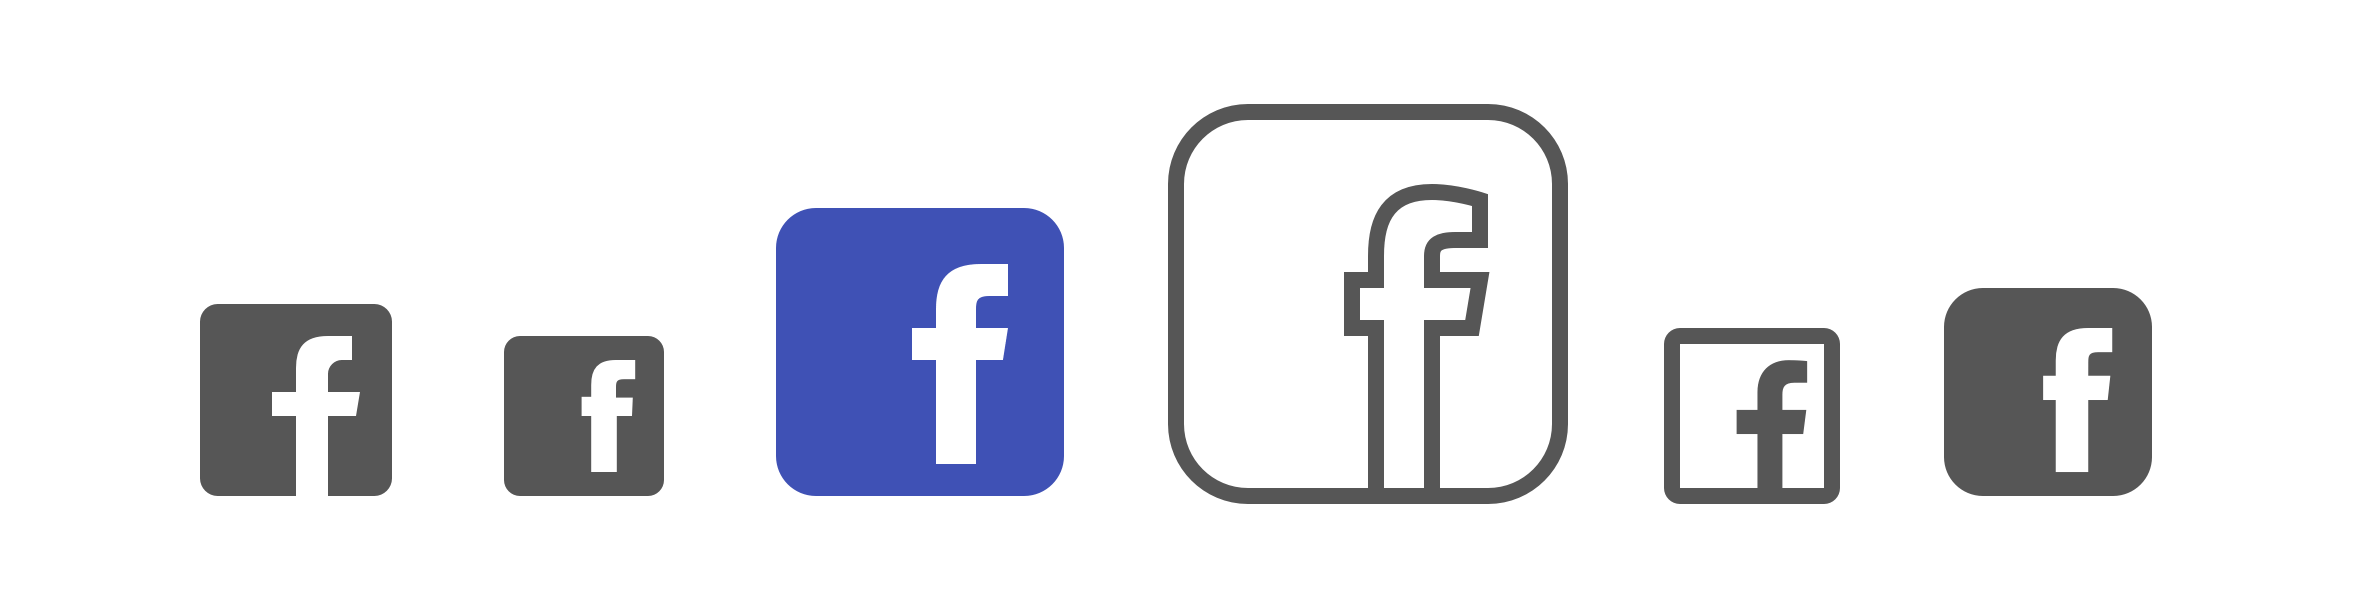 Original Facebook Logo - Free Original Facebook Icon 213236 | Download Original Facebook Icon ...